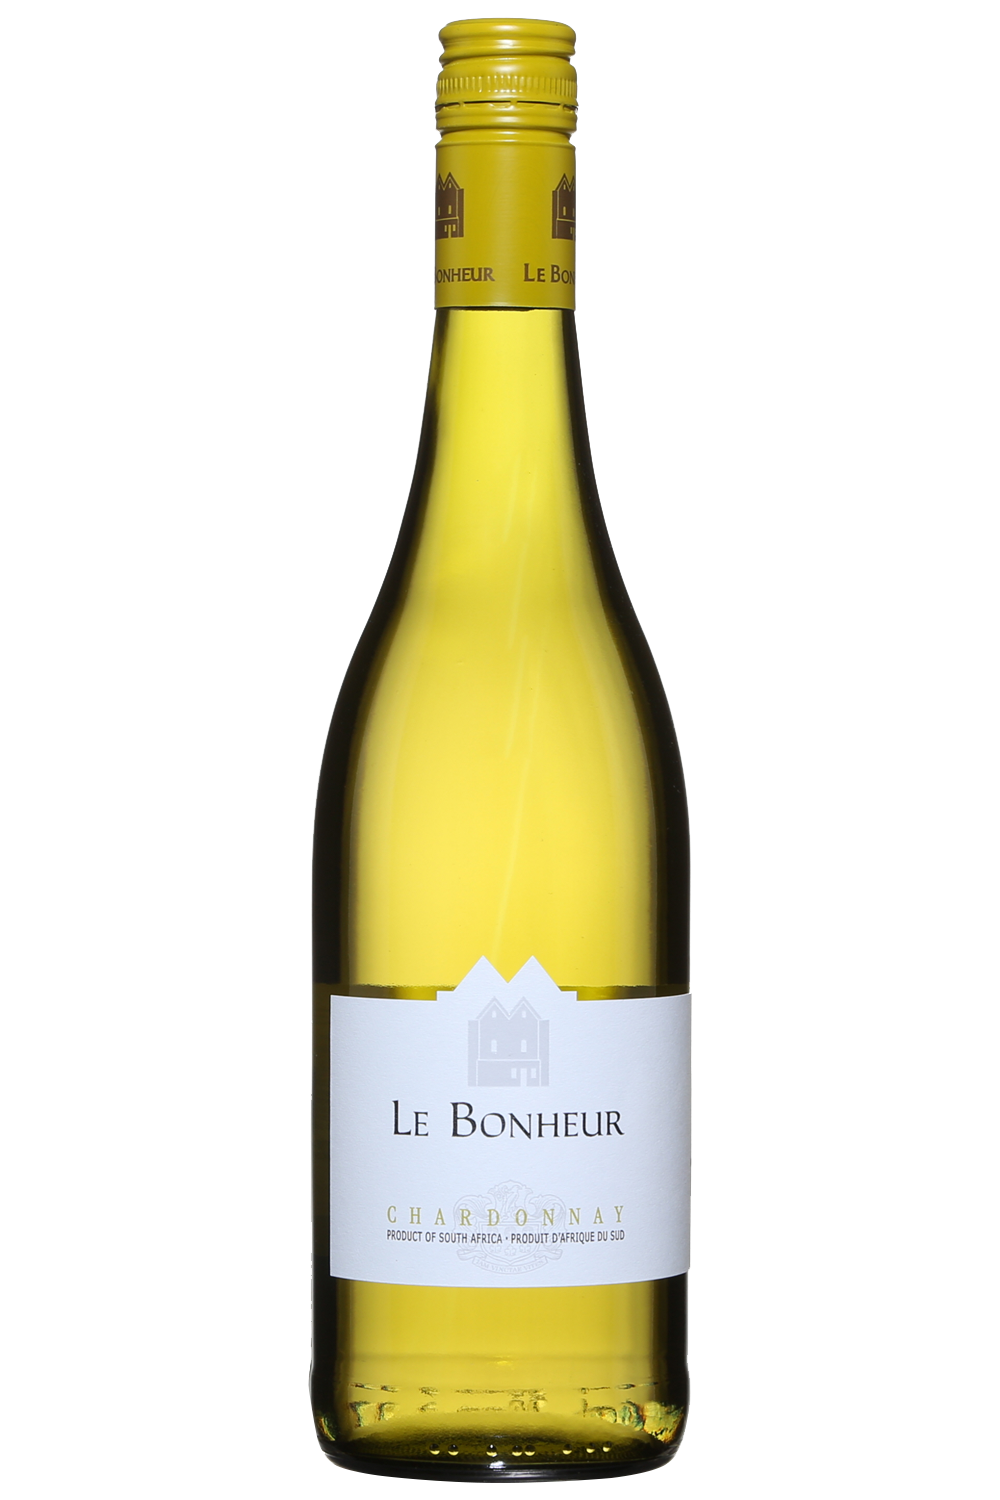 Le Bonheur Chardonnay 2017, $15.60